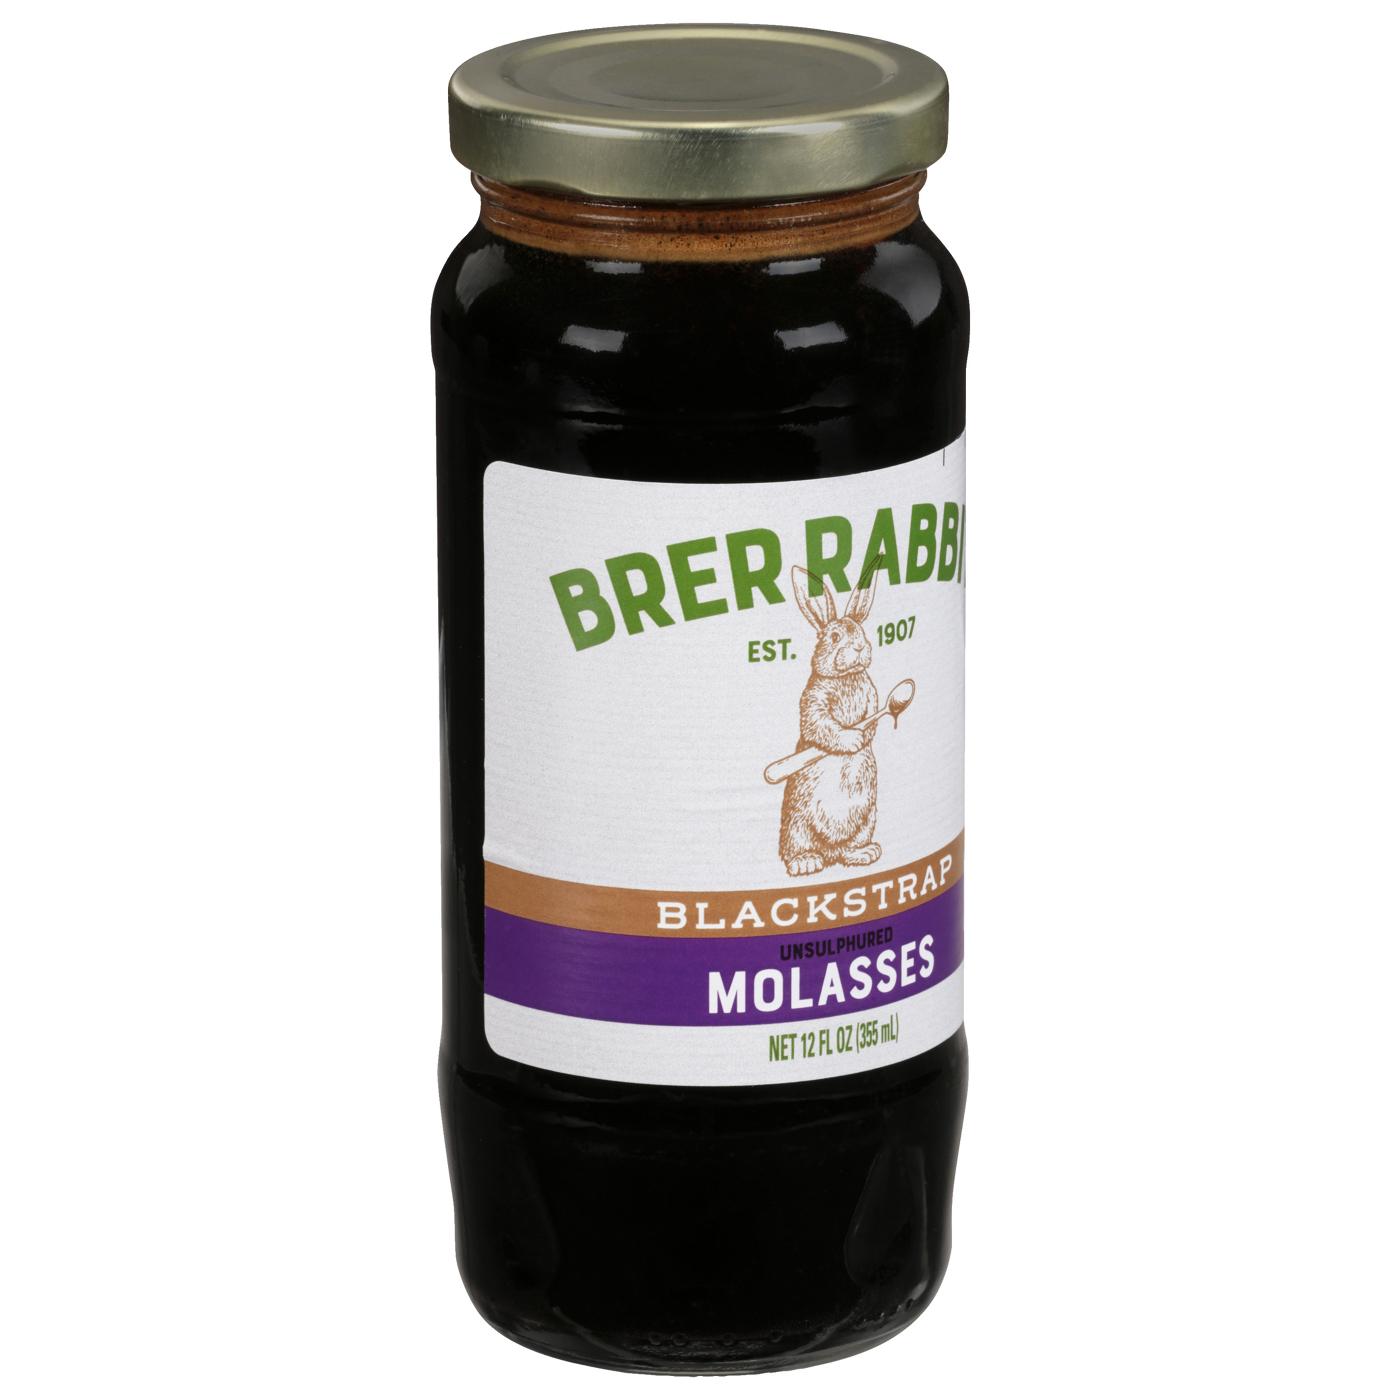 Brer Rabbit Molasses Blackstrap; image 3 of 3